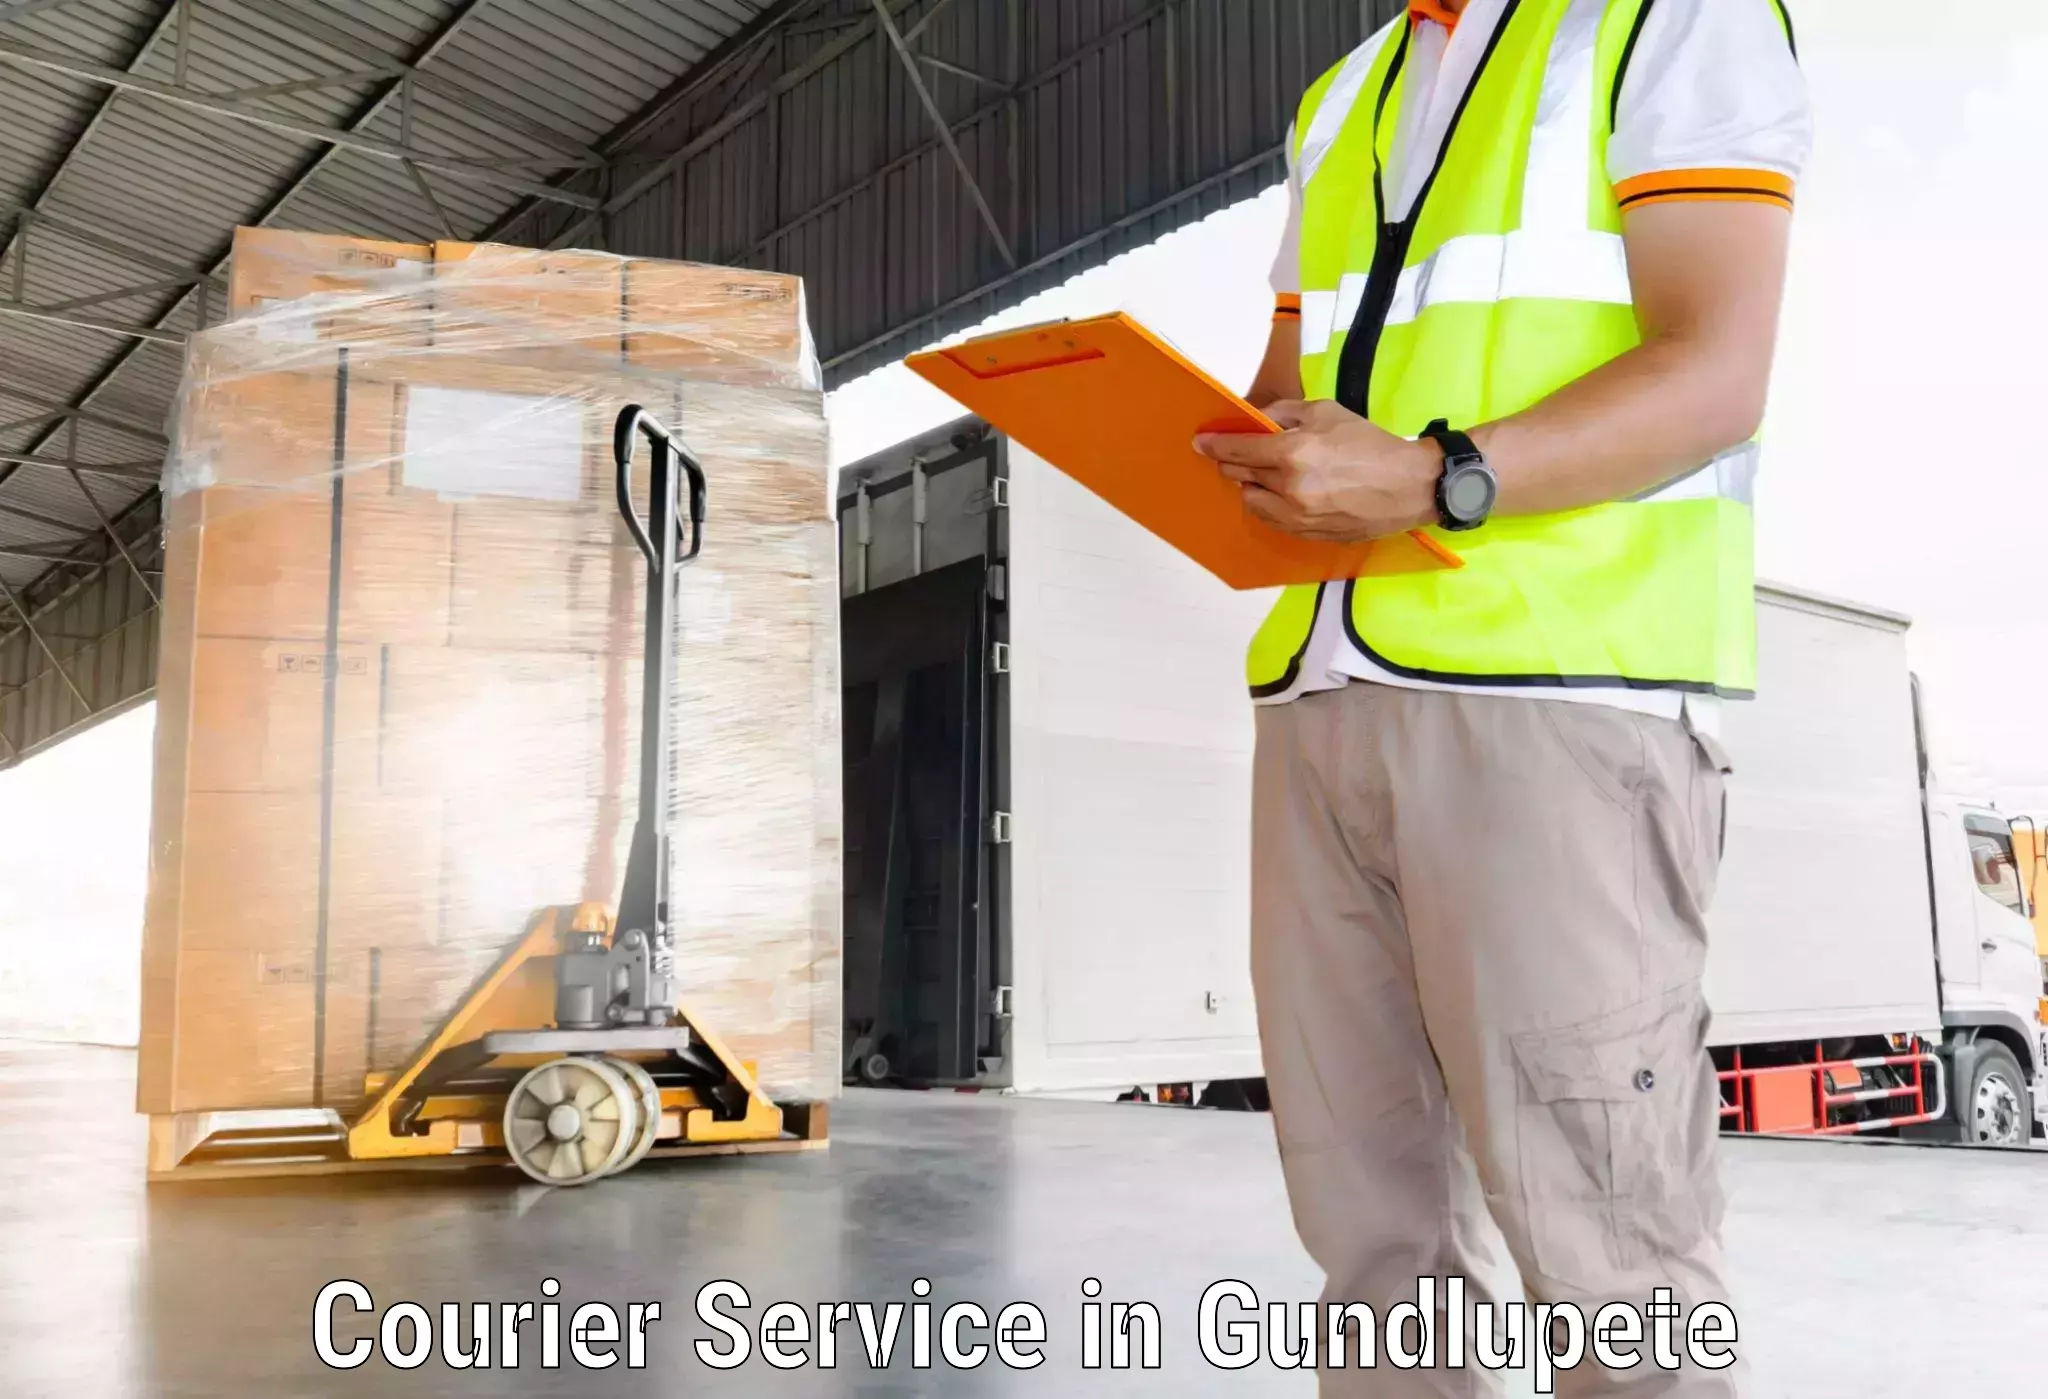 On-demand courier in Gundlupete